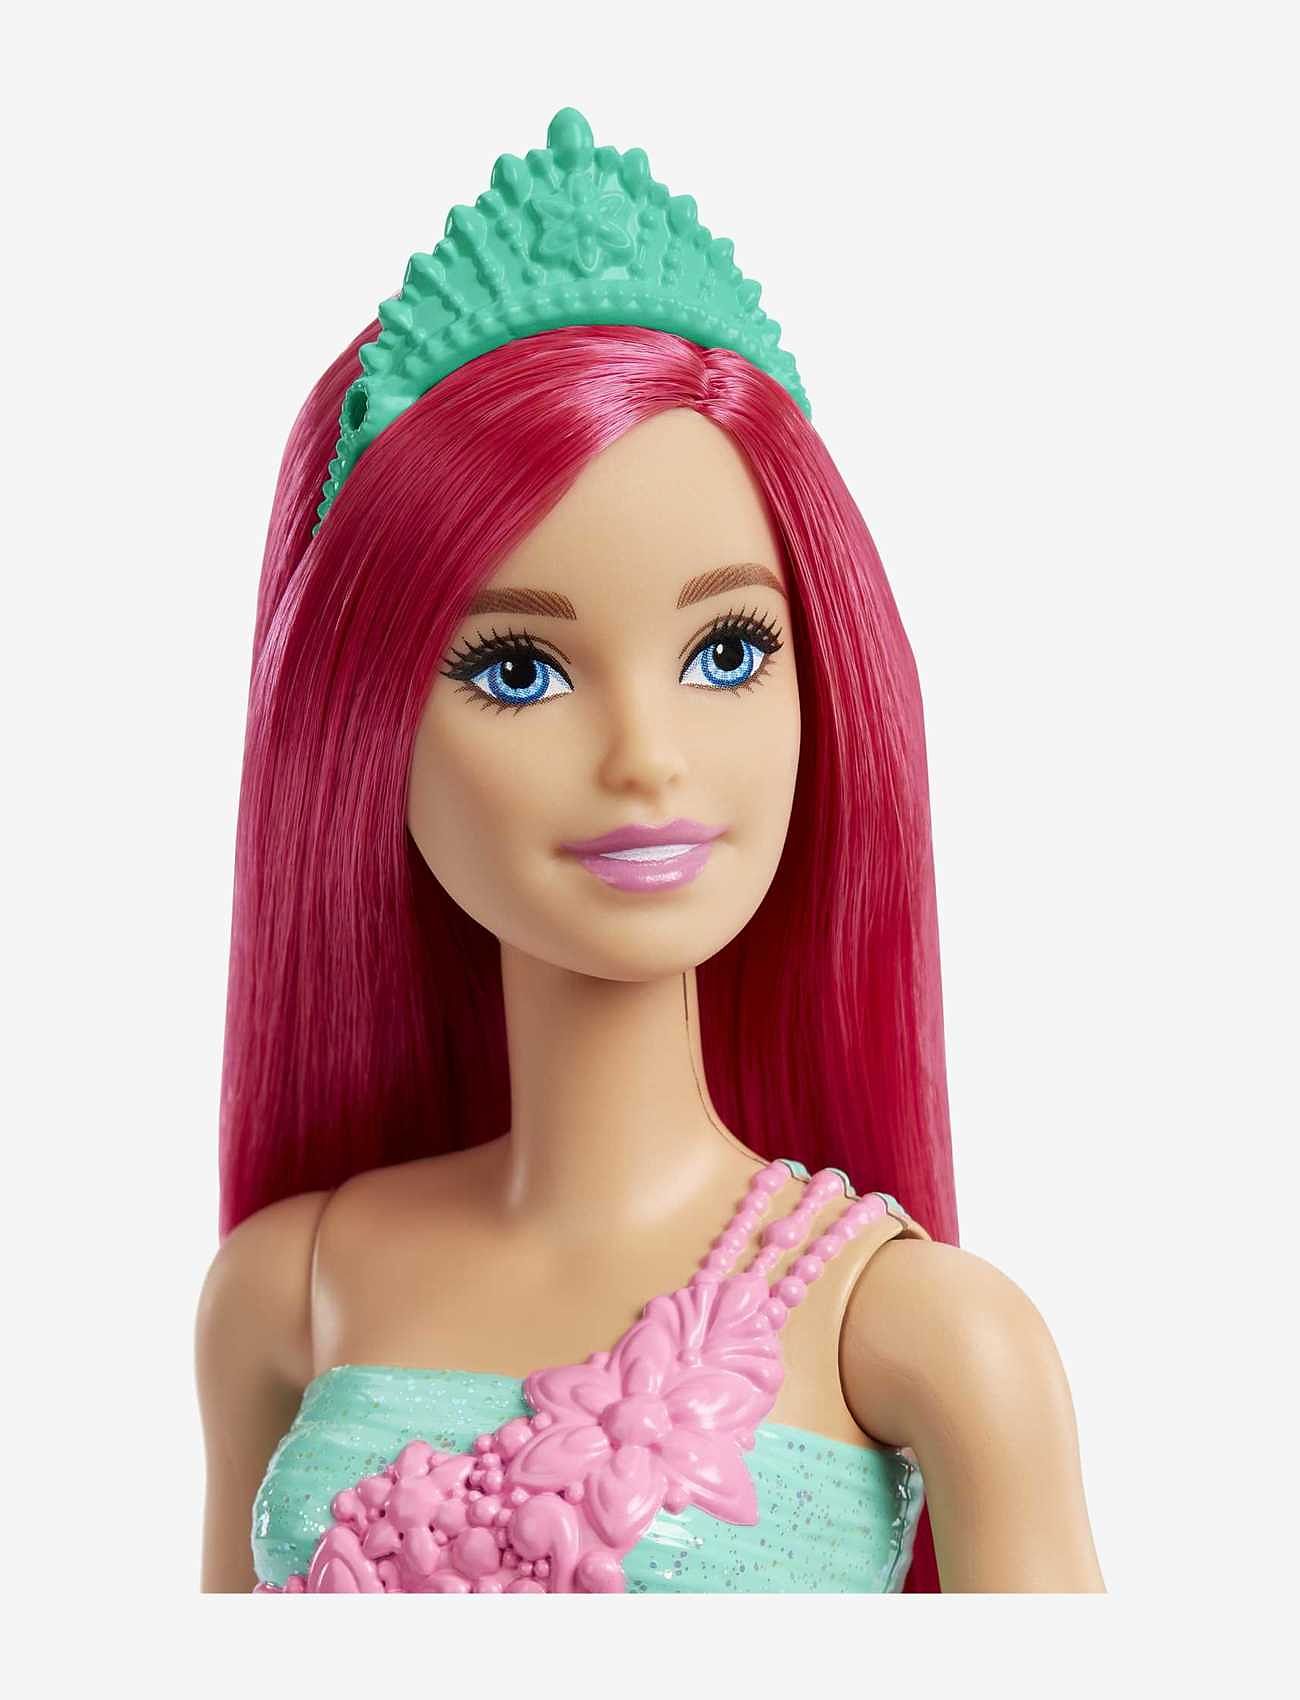 Barbie - Dreamtopia Doll - lowest prices - multi color - 1